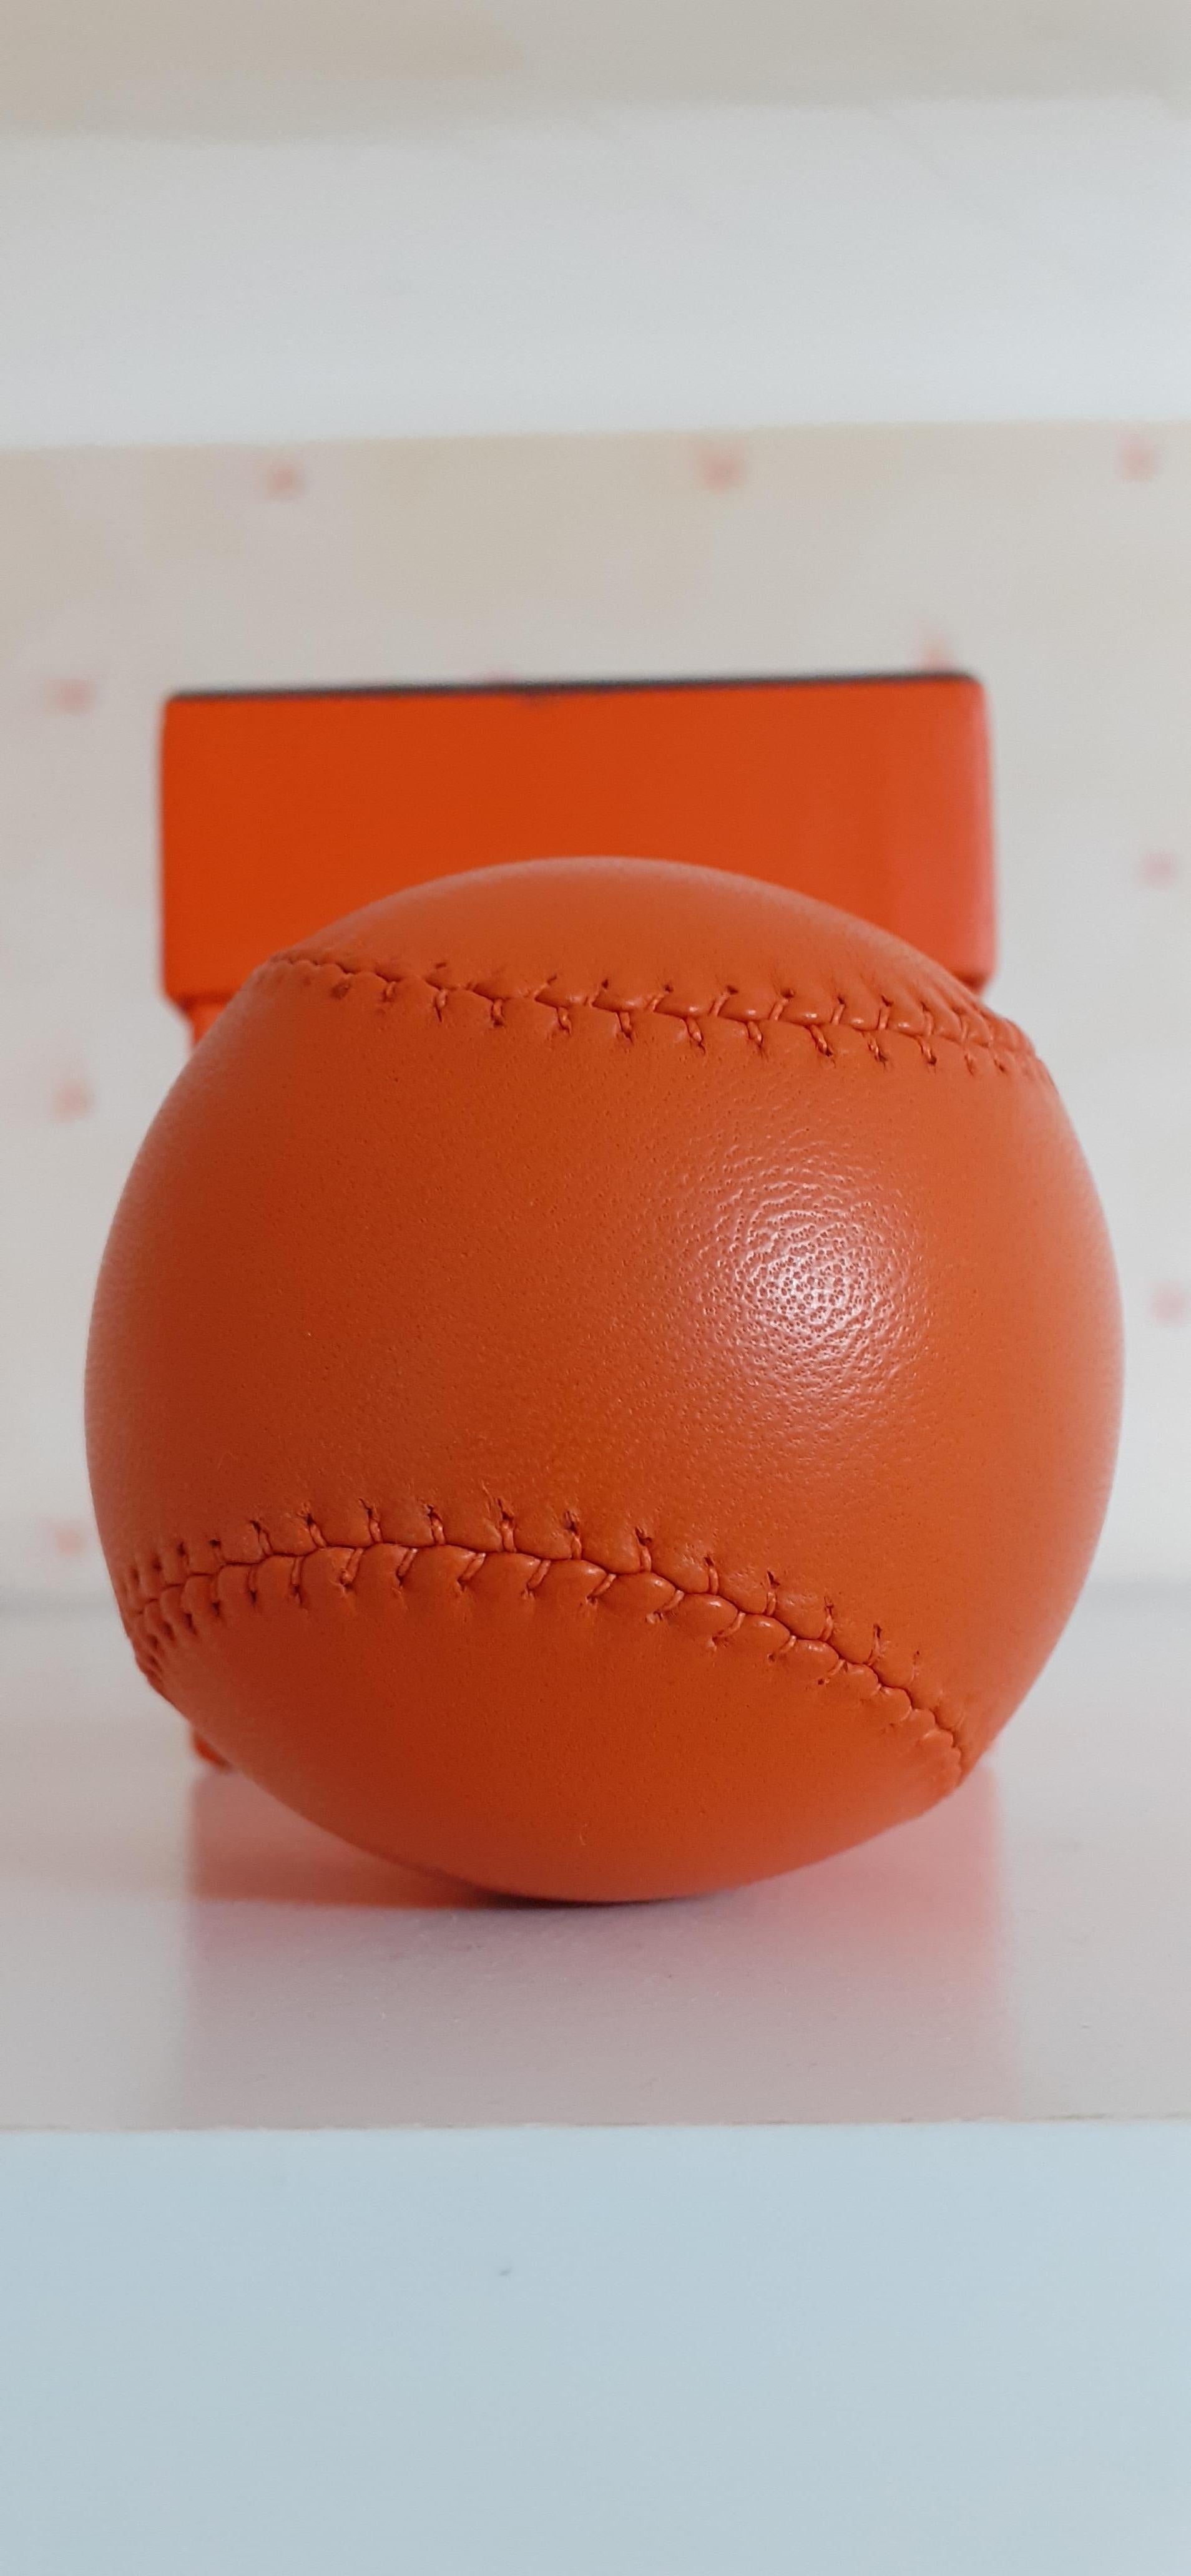 Hermès Herstress Anti-Stress Ball in Orange Leather RARE For Sale 1